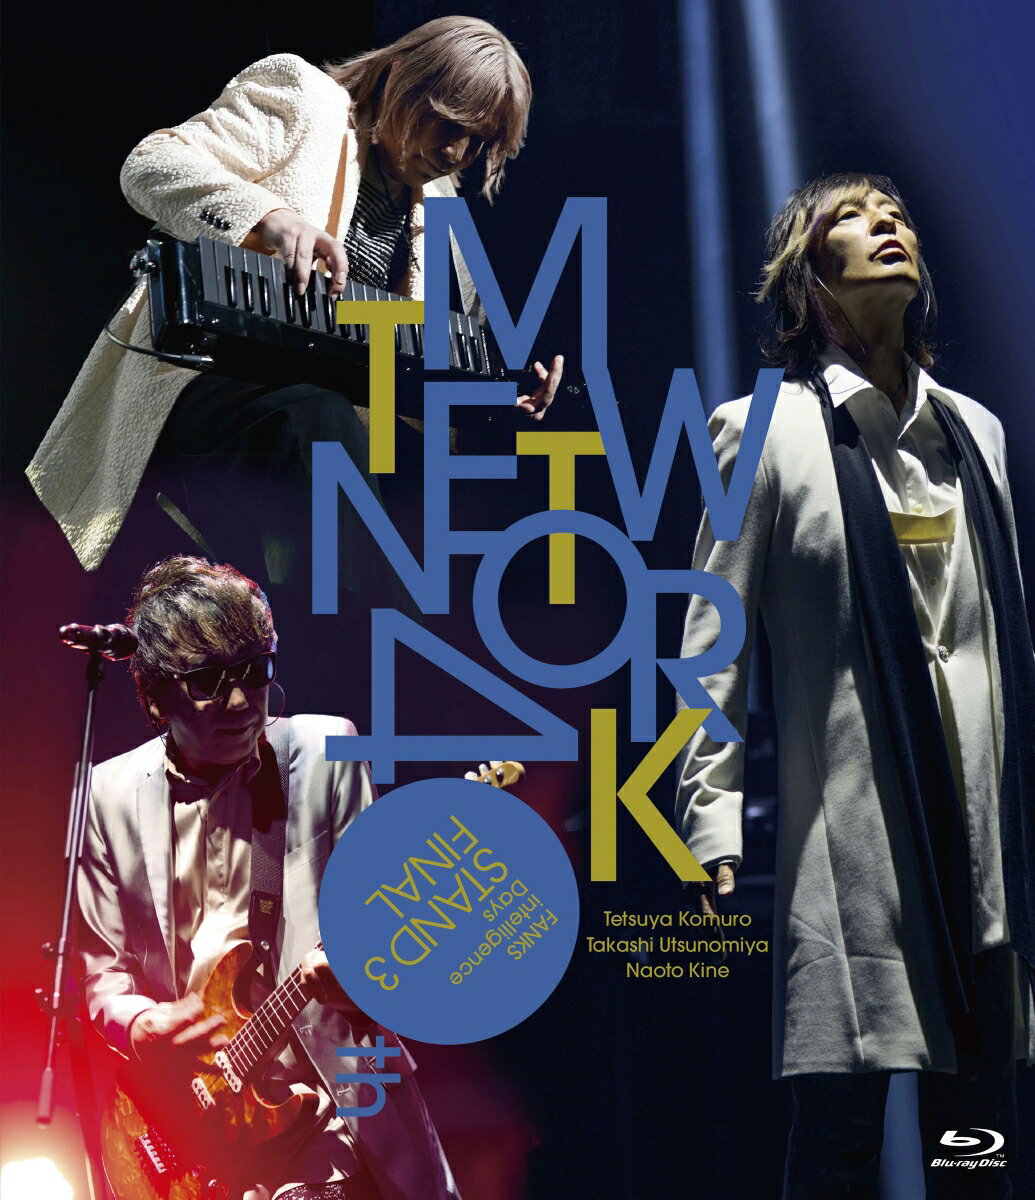 NEWS 20th Anniversary LIVE 2023 NEWS EXPO (初回盤＋通常盤 Blu-rayセット)【Blu-ray】 [ NEWS ]